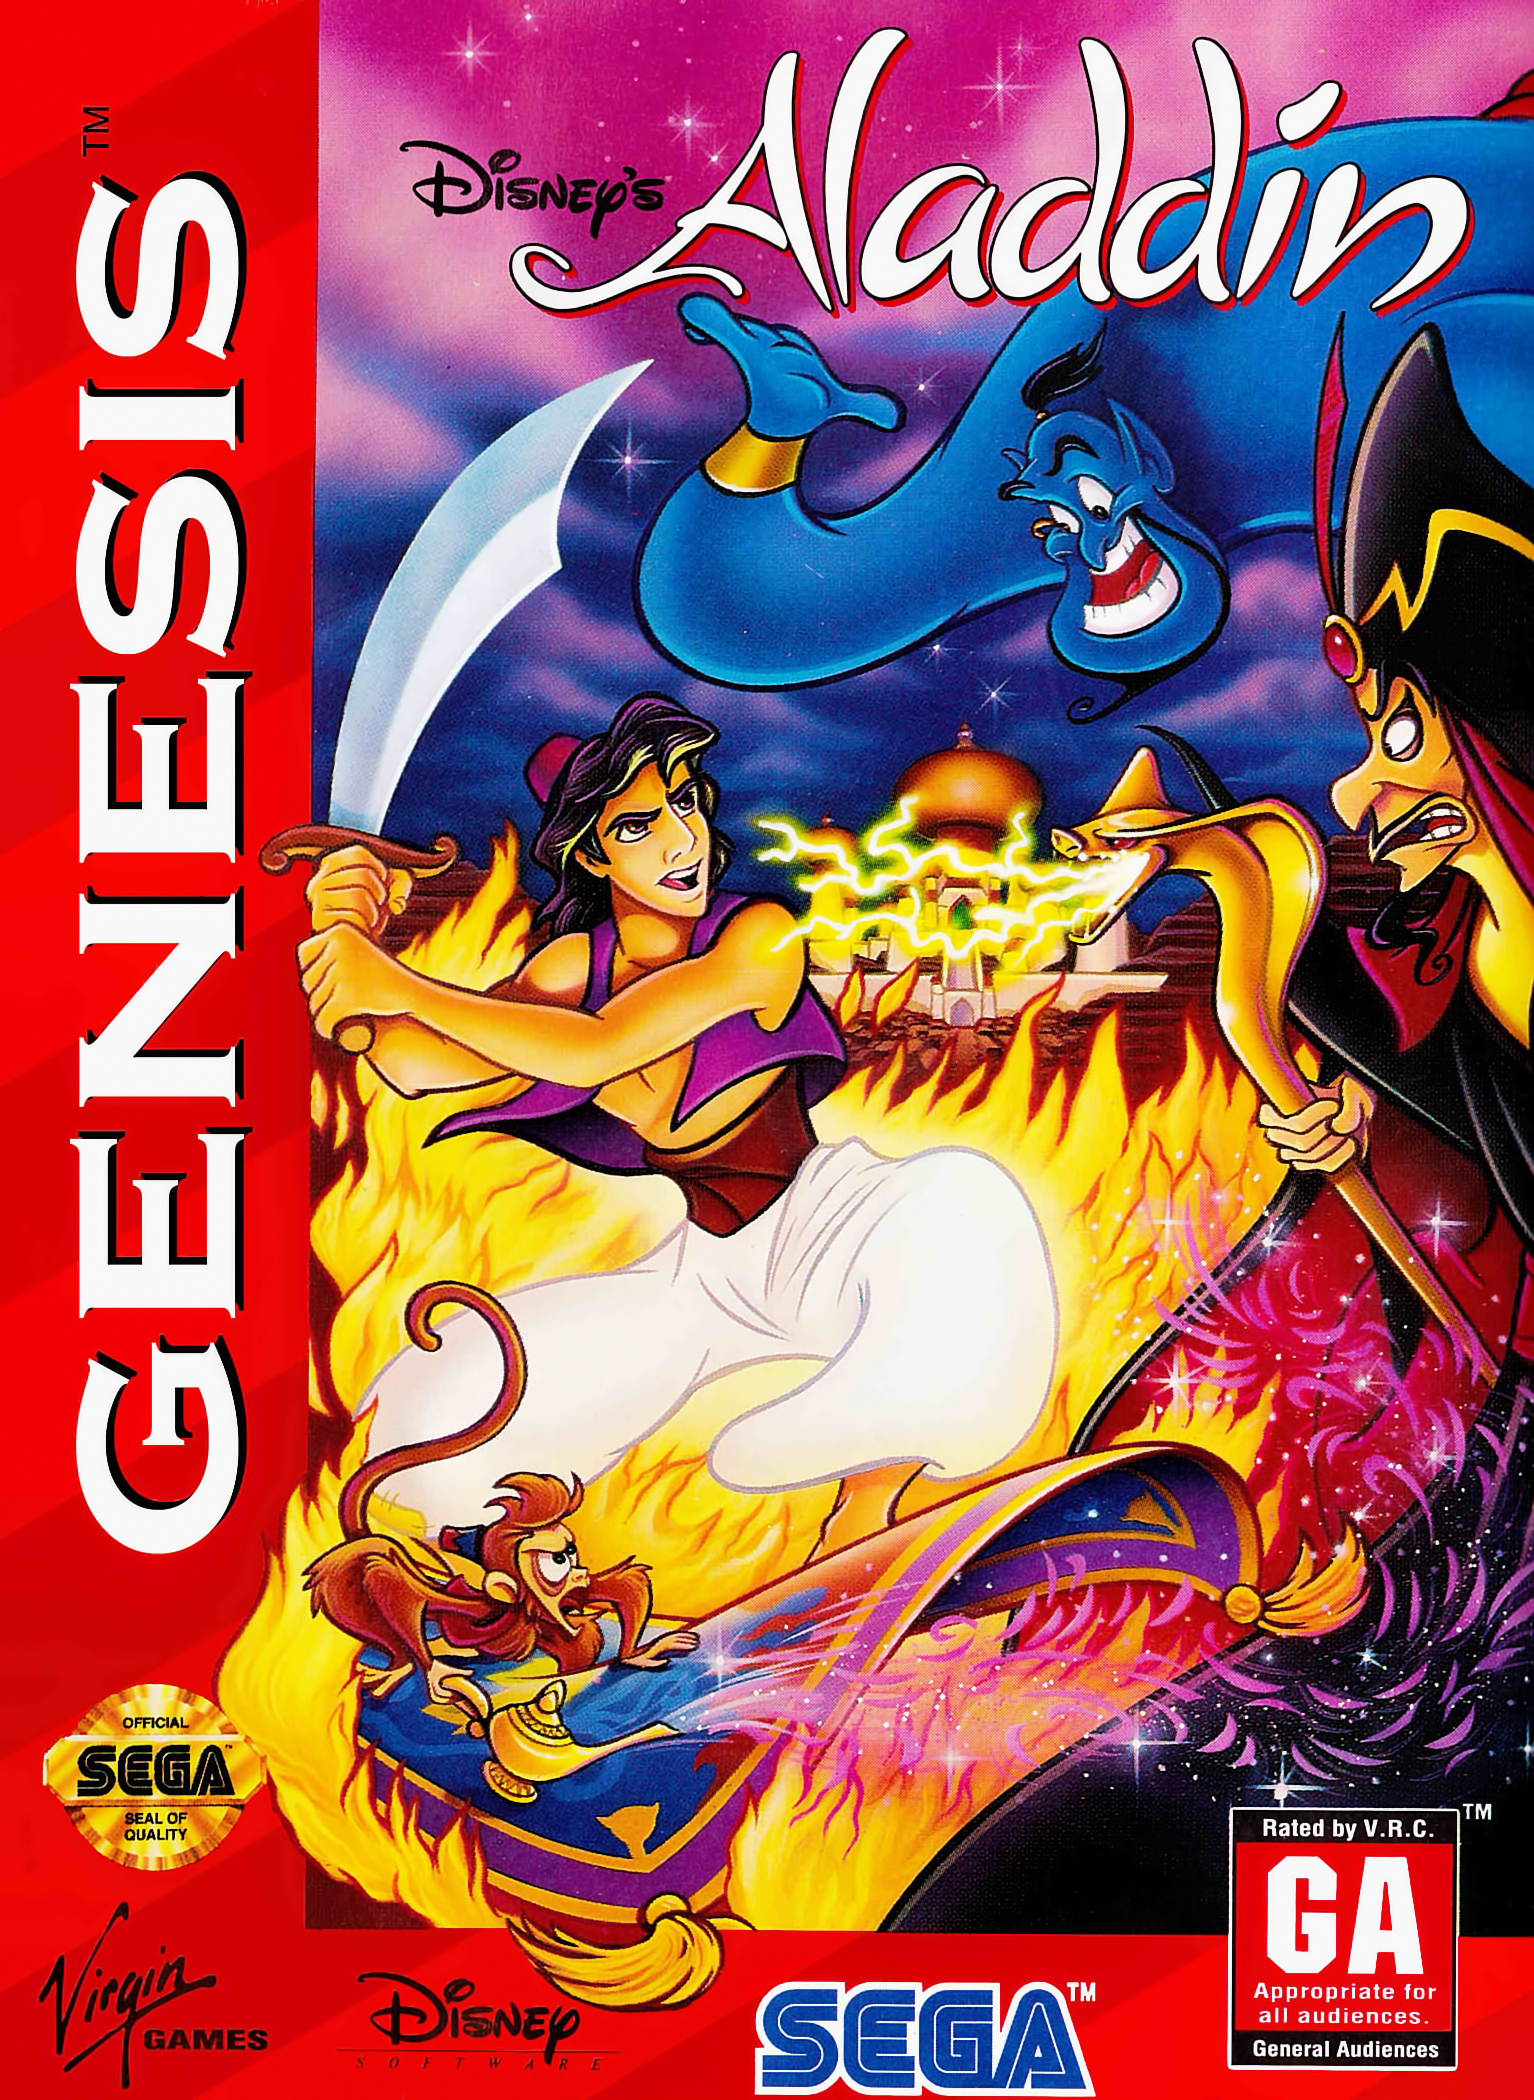 Игра алладин на сеге. Disney’s Aladdin (Аладдин), 1993. Алладин 2 игра сега. Алладин игра сега. Disney's Aladdin Sega обложка.